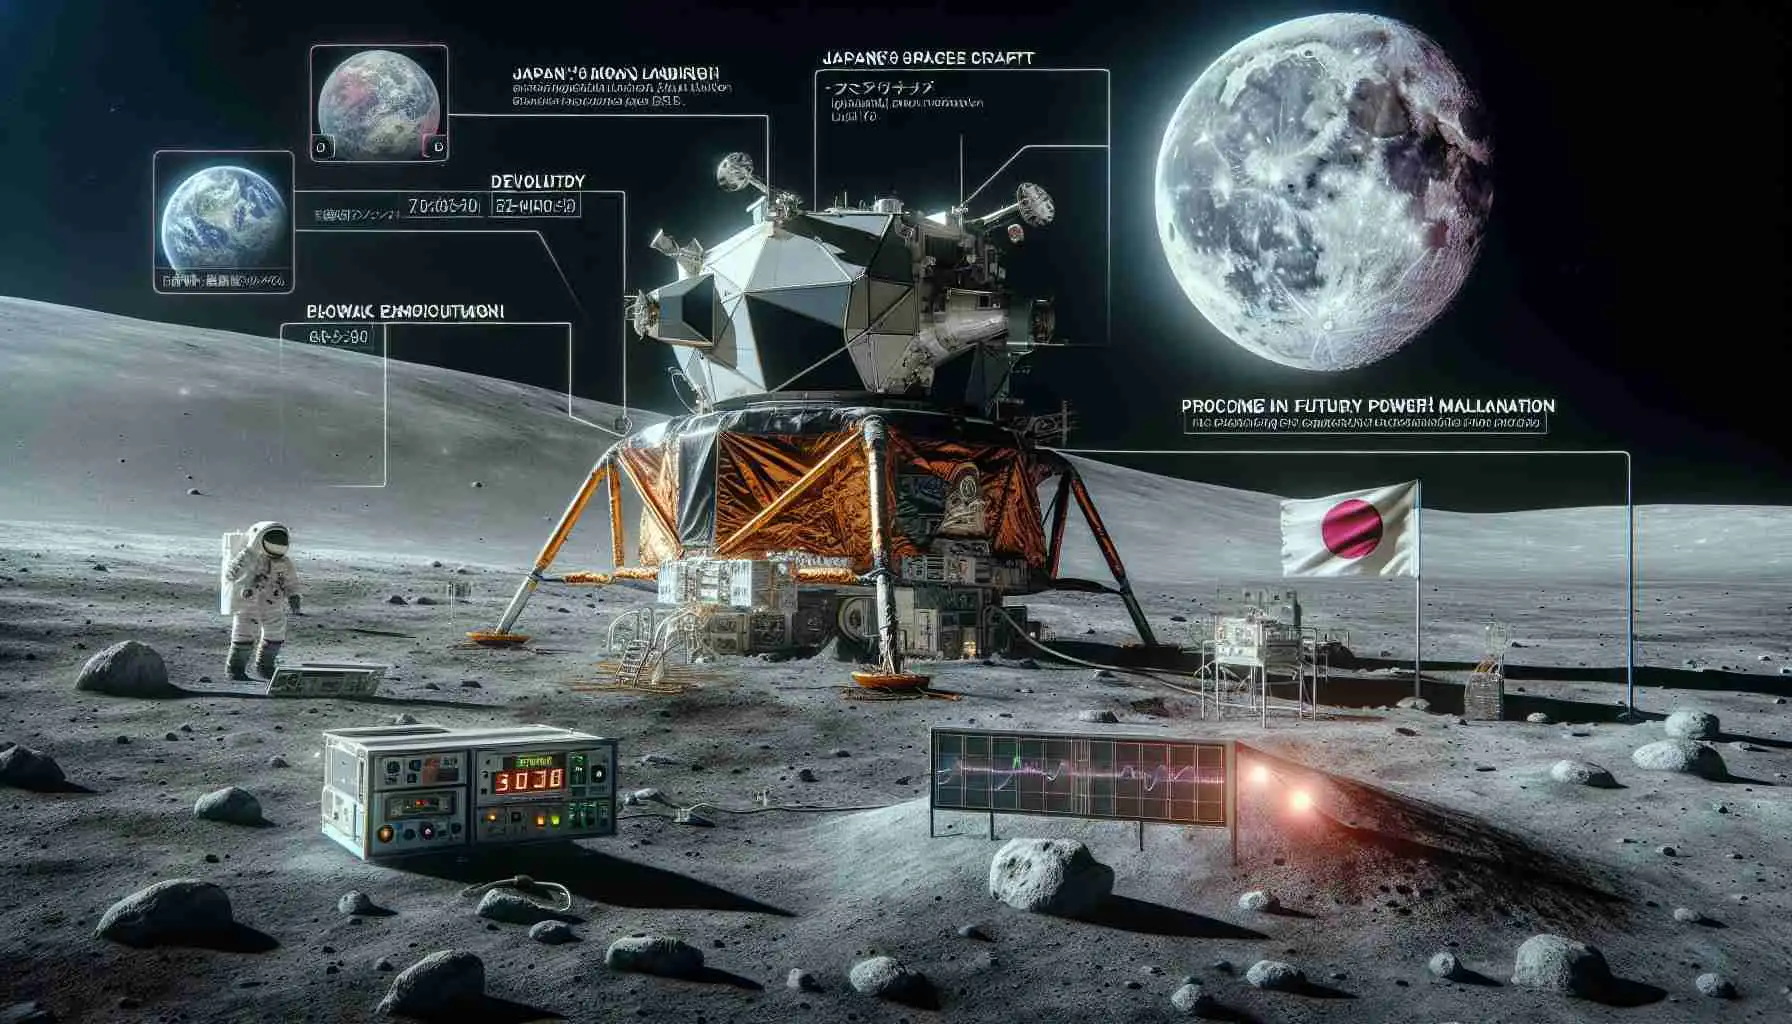 Japan Moon Landing Mission Power Issue Future Exploration